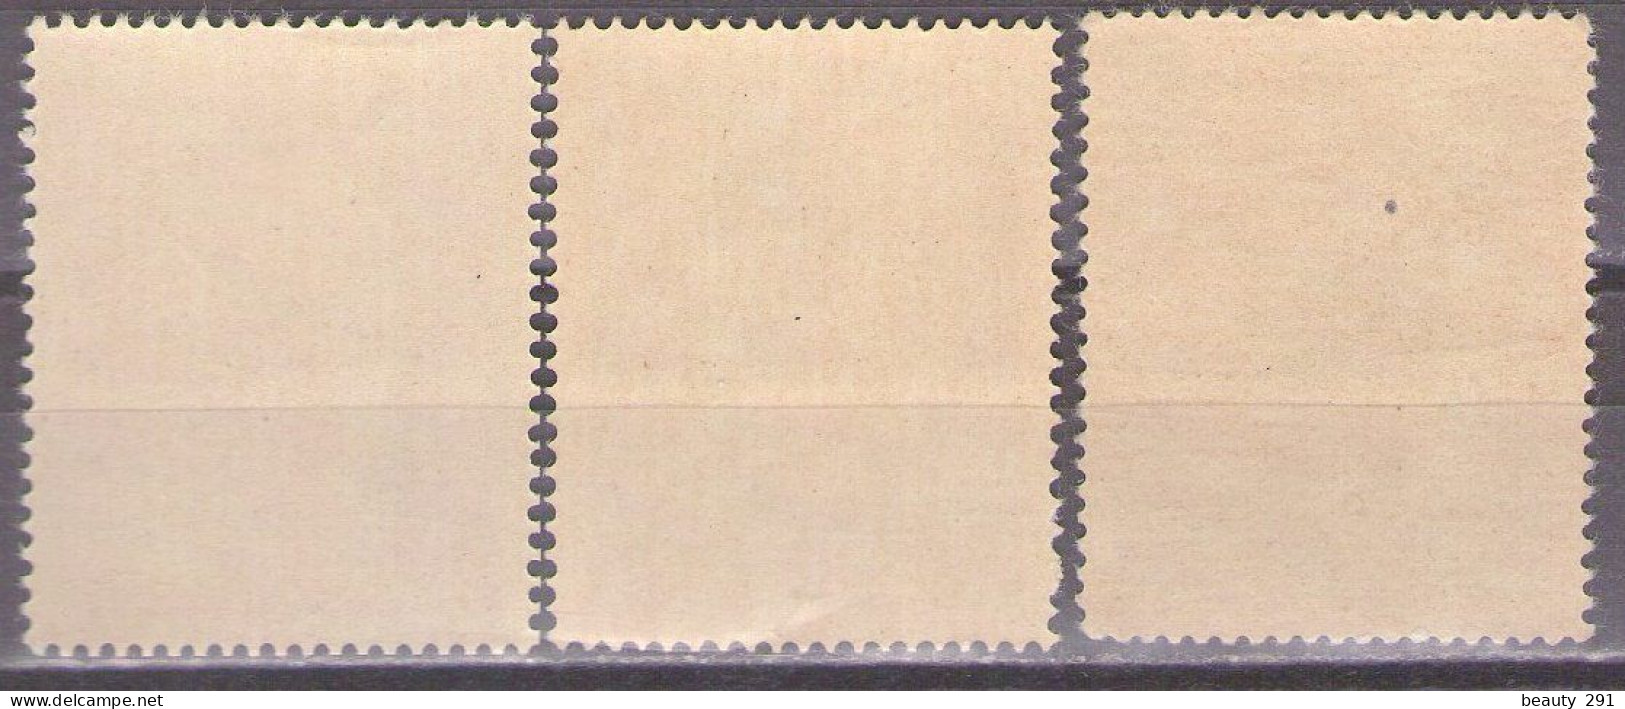 Yugoslavia 1951 - Airmail-Alpinists - Mi 655-657 - MNH**VF - Unused Stamps